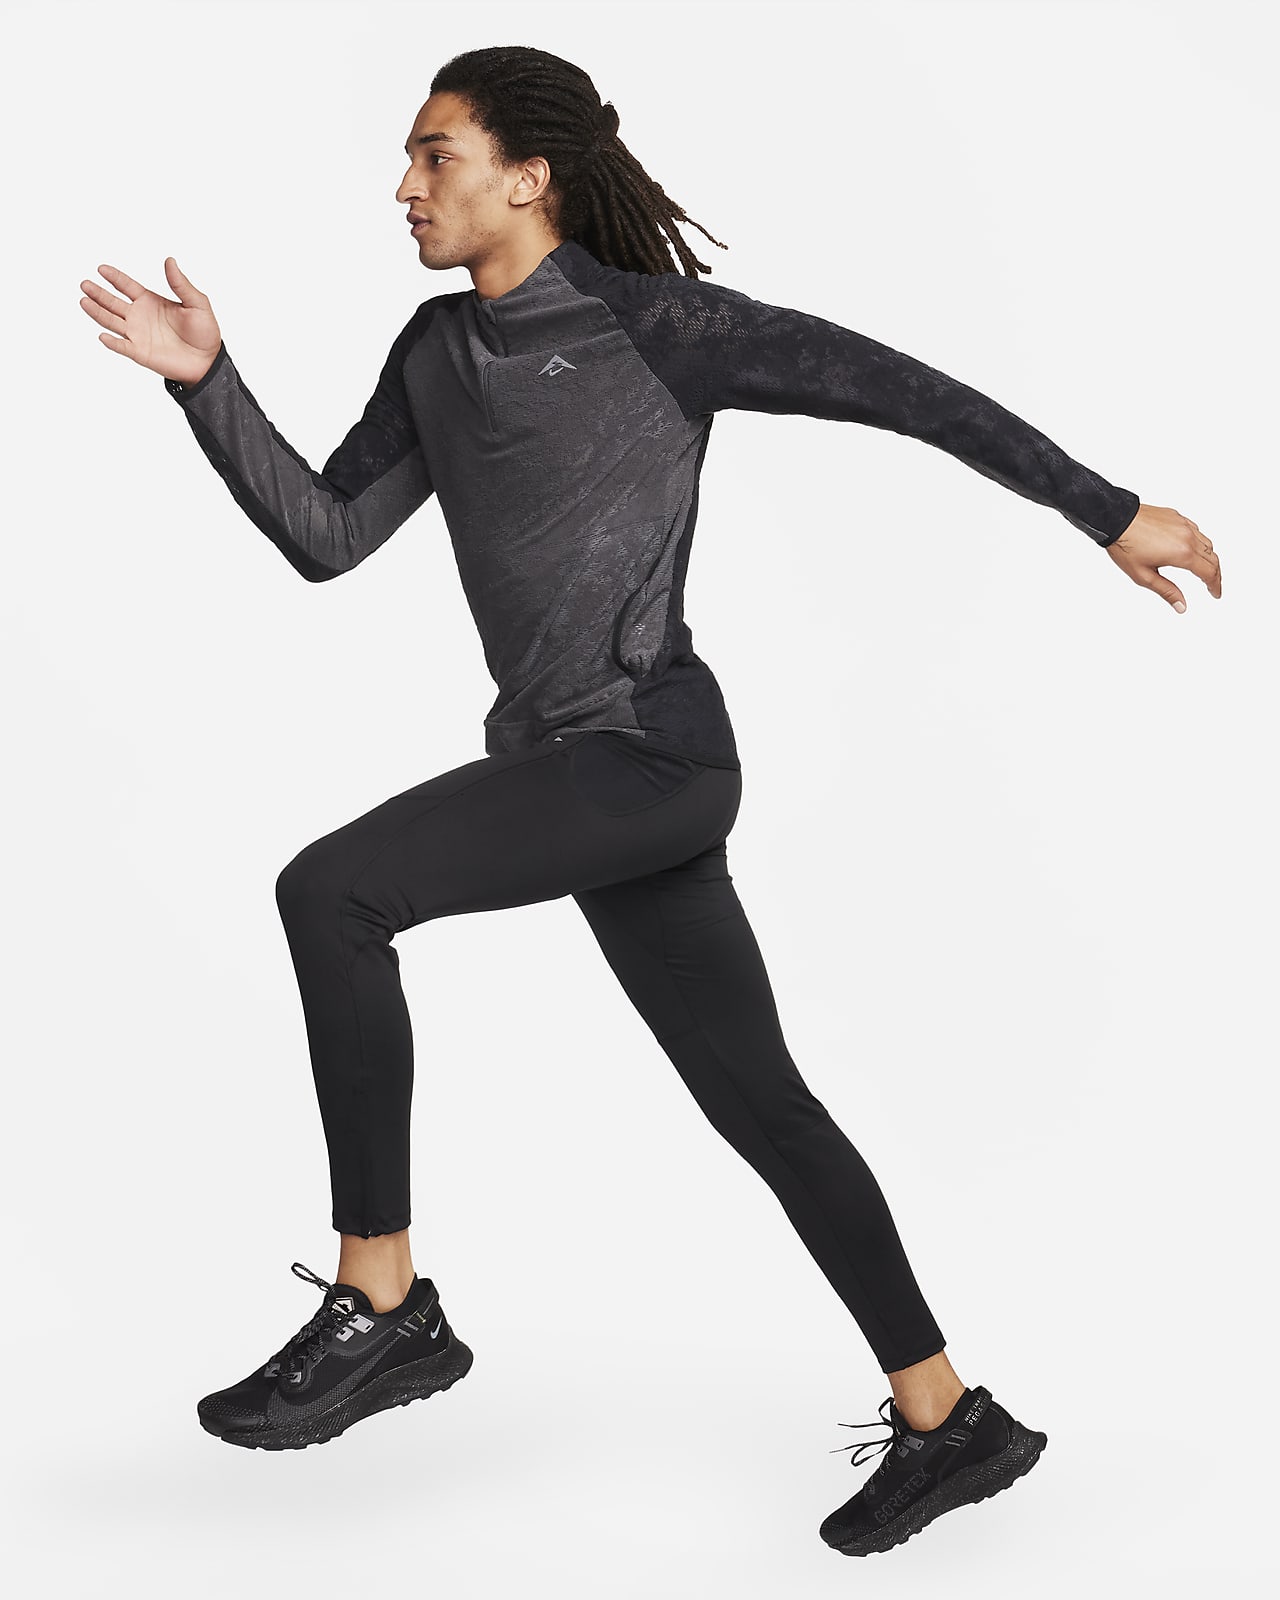 Nike Lunar Ray Men's Winterized Running Tights